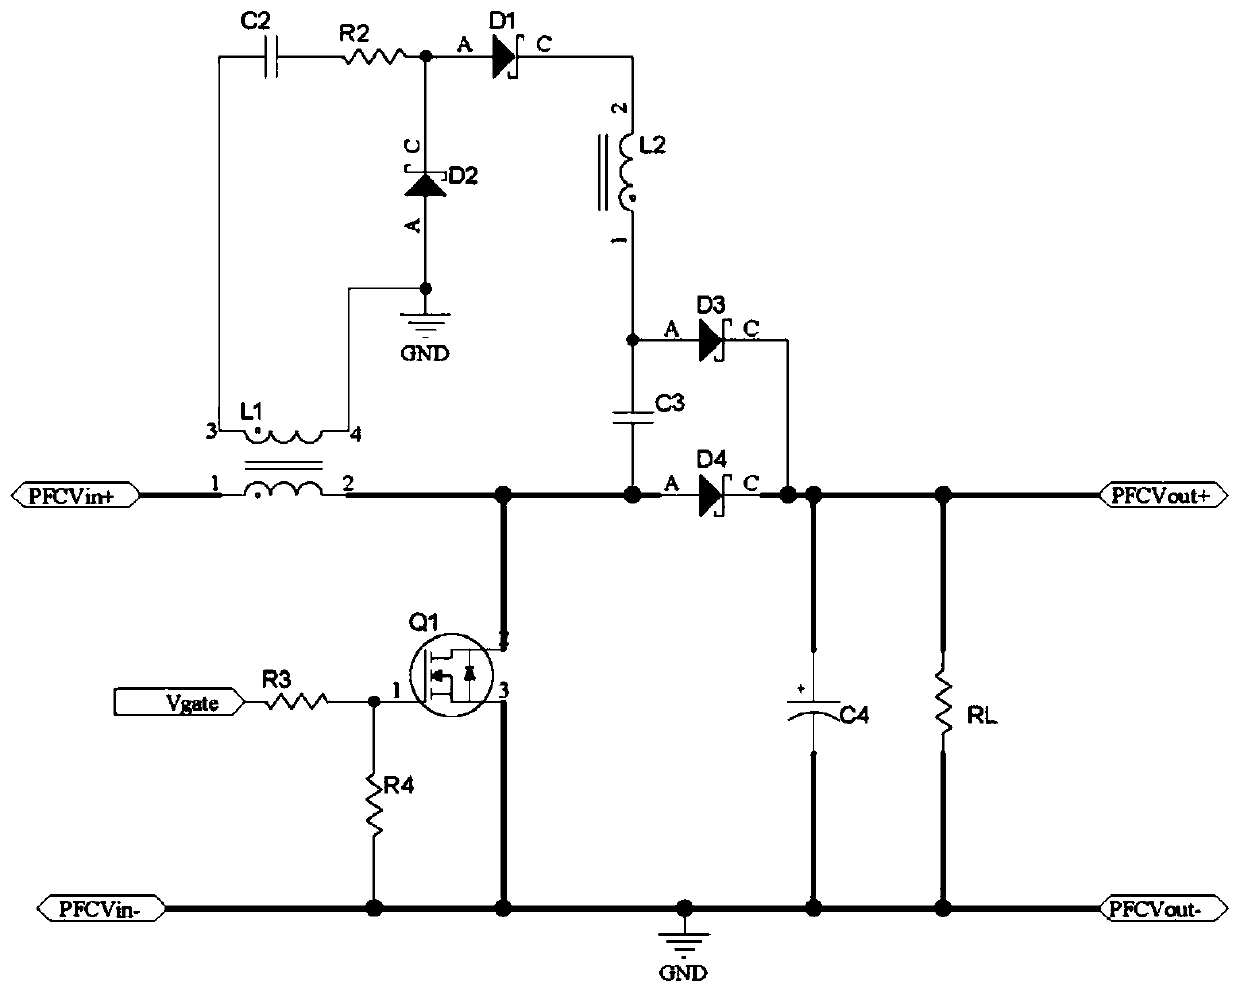 Non-destructive absorption circuit of active PFC circuit